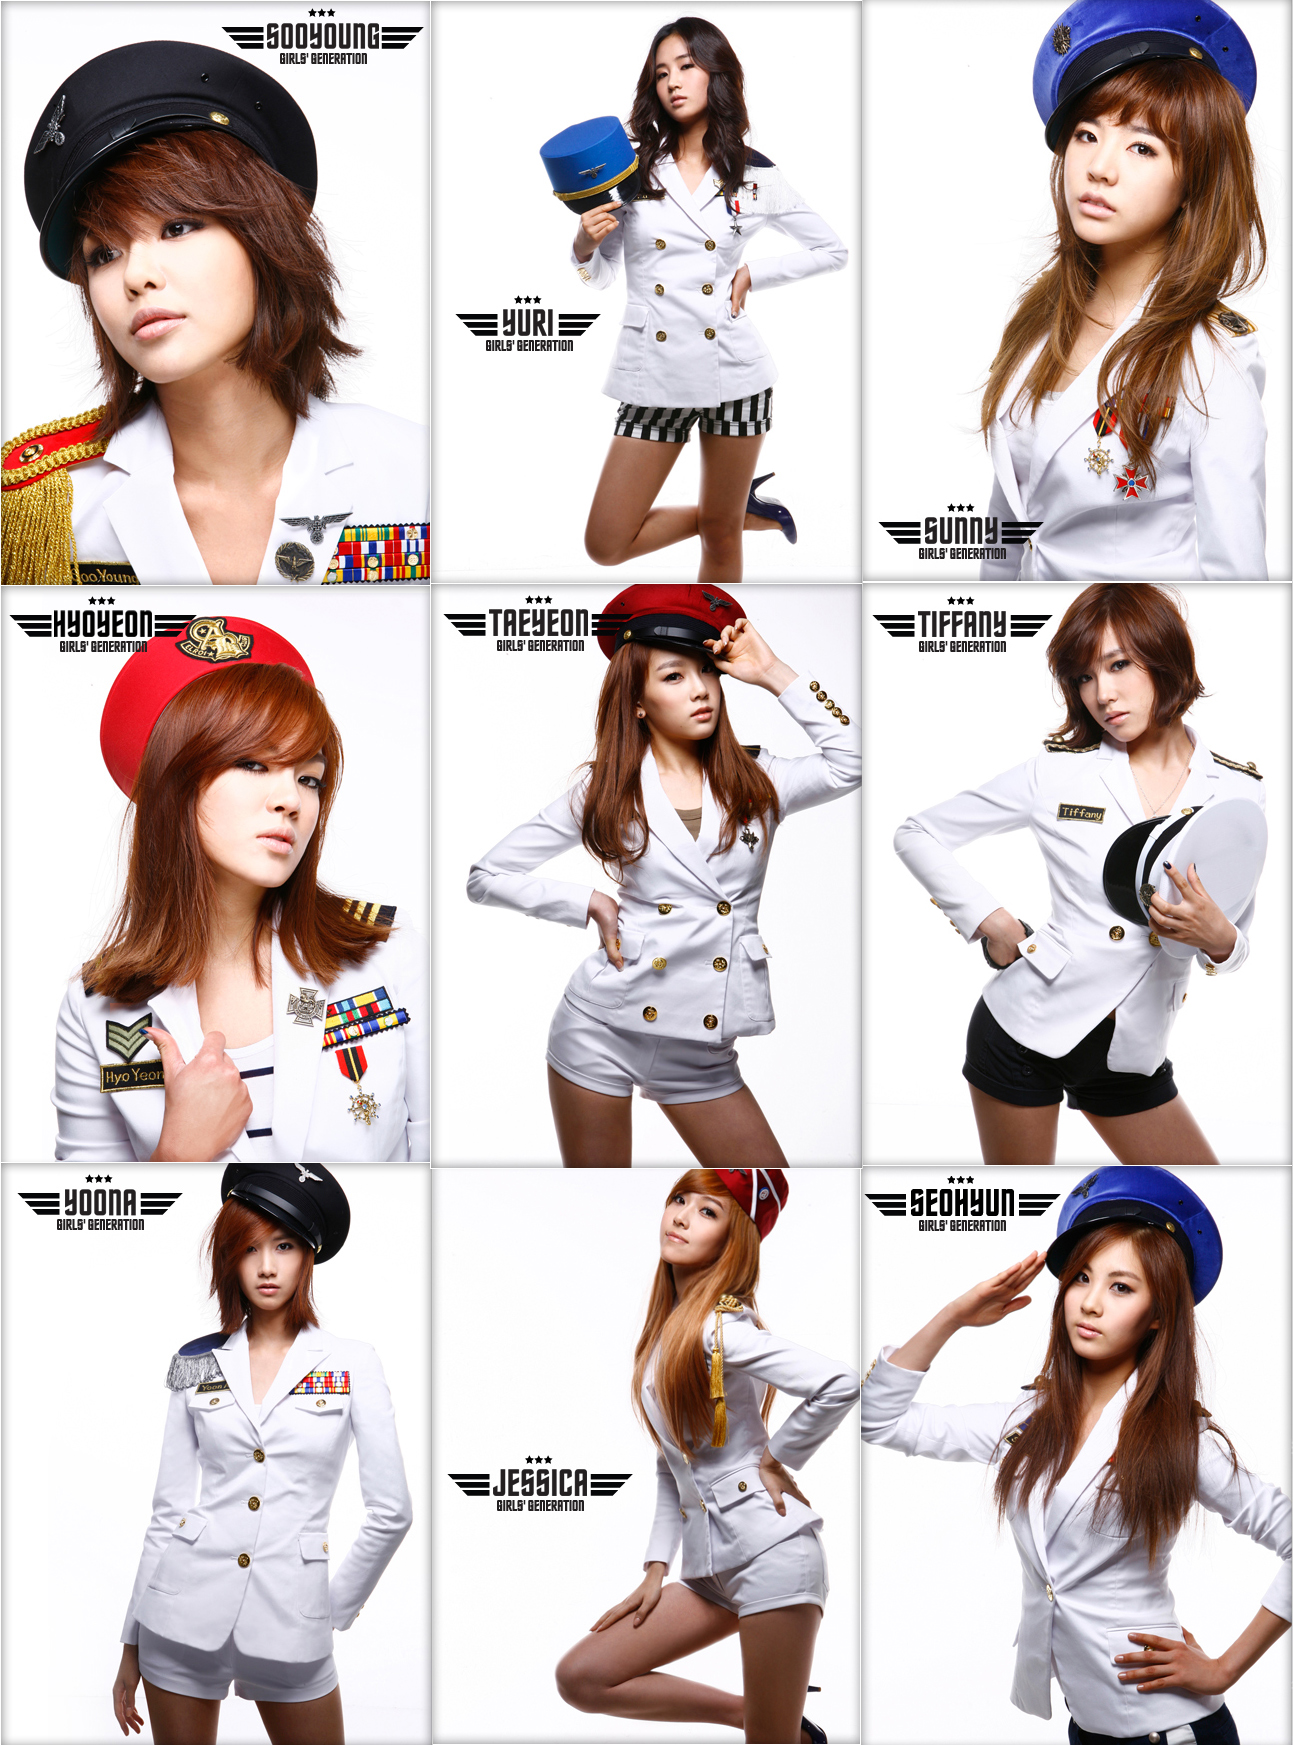 http://seouljuice.files.wordpress.com/2009/06/marine_girls23.jpg